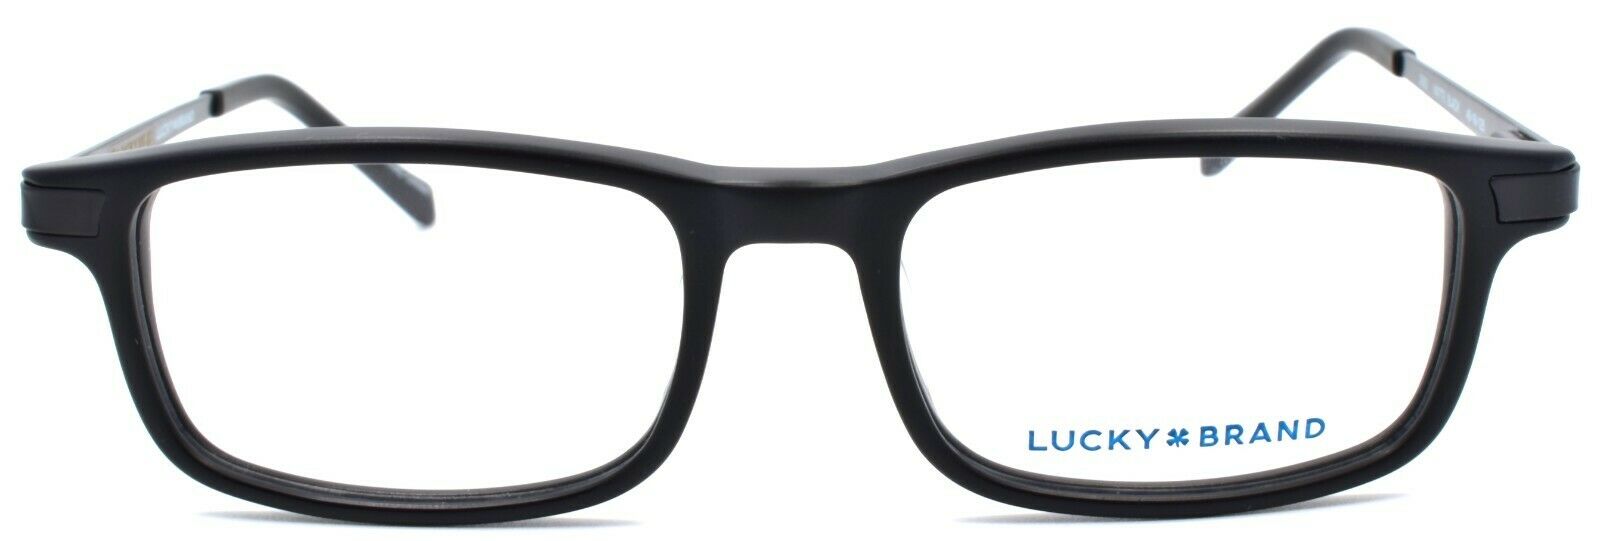 2-LUCKY BRAND D805 Kids Eyeglasses Frames 45-16-125 Matte Black-751286295306-IKSpecs